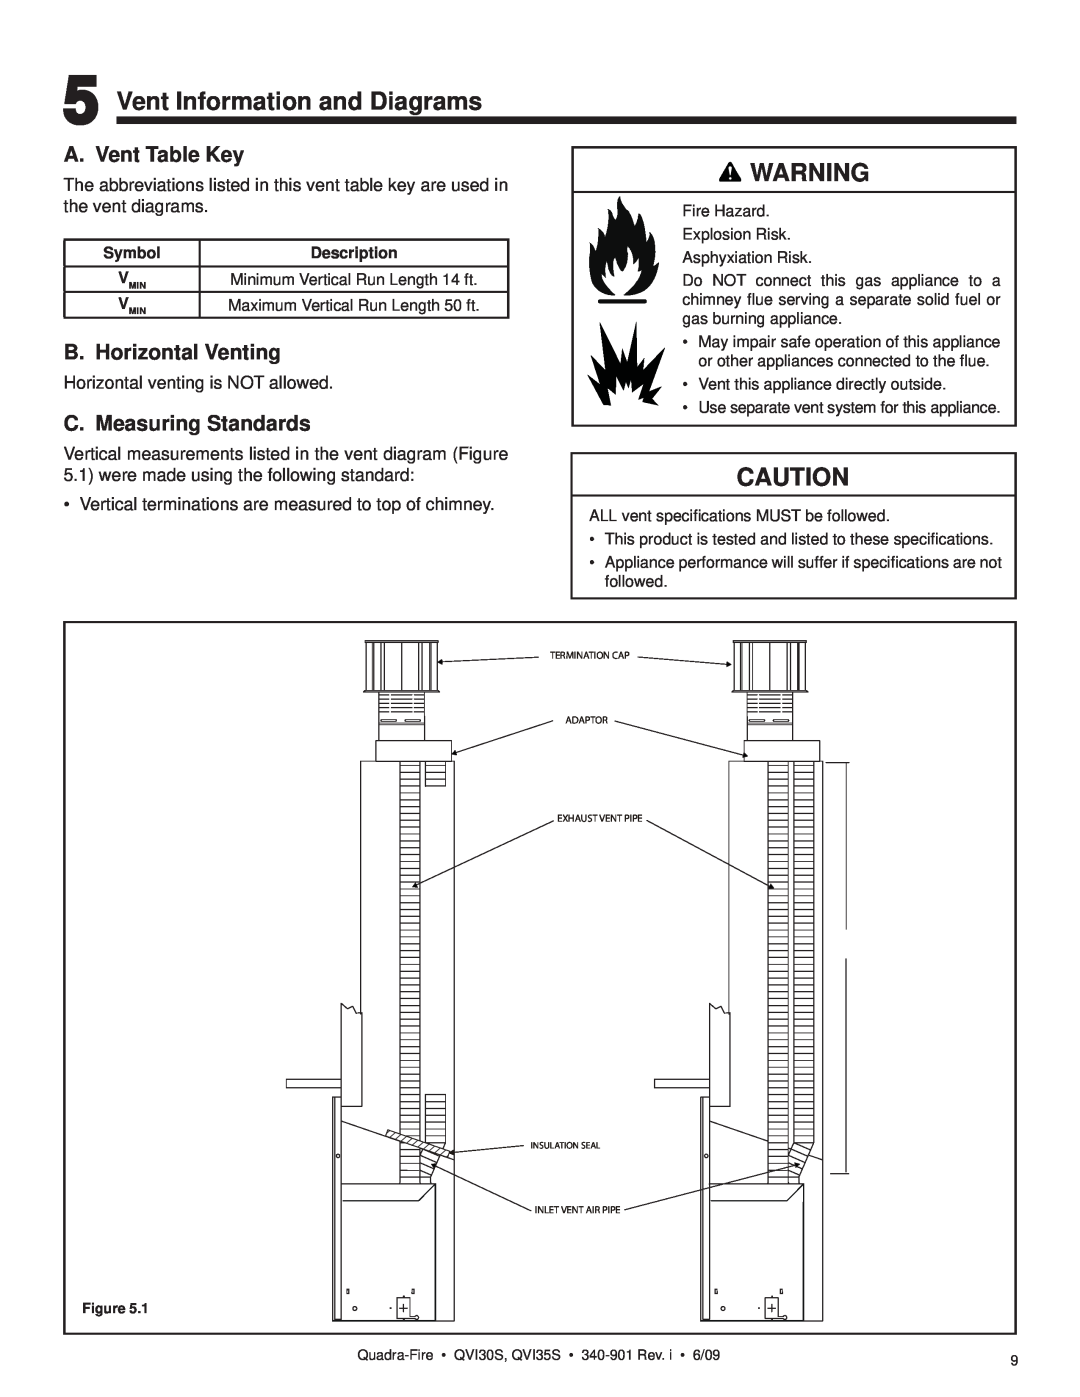 Quadra-Fire QVI30S, QVI35S Vent Information and Diagrams, A. Vent Table Key, B. Horizontal Venting, C. Measuring Standards 